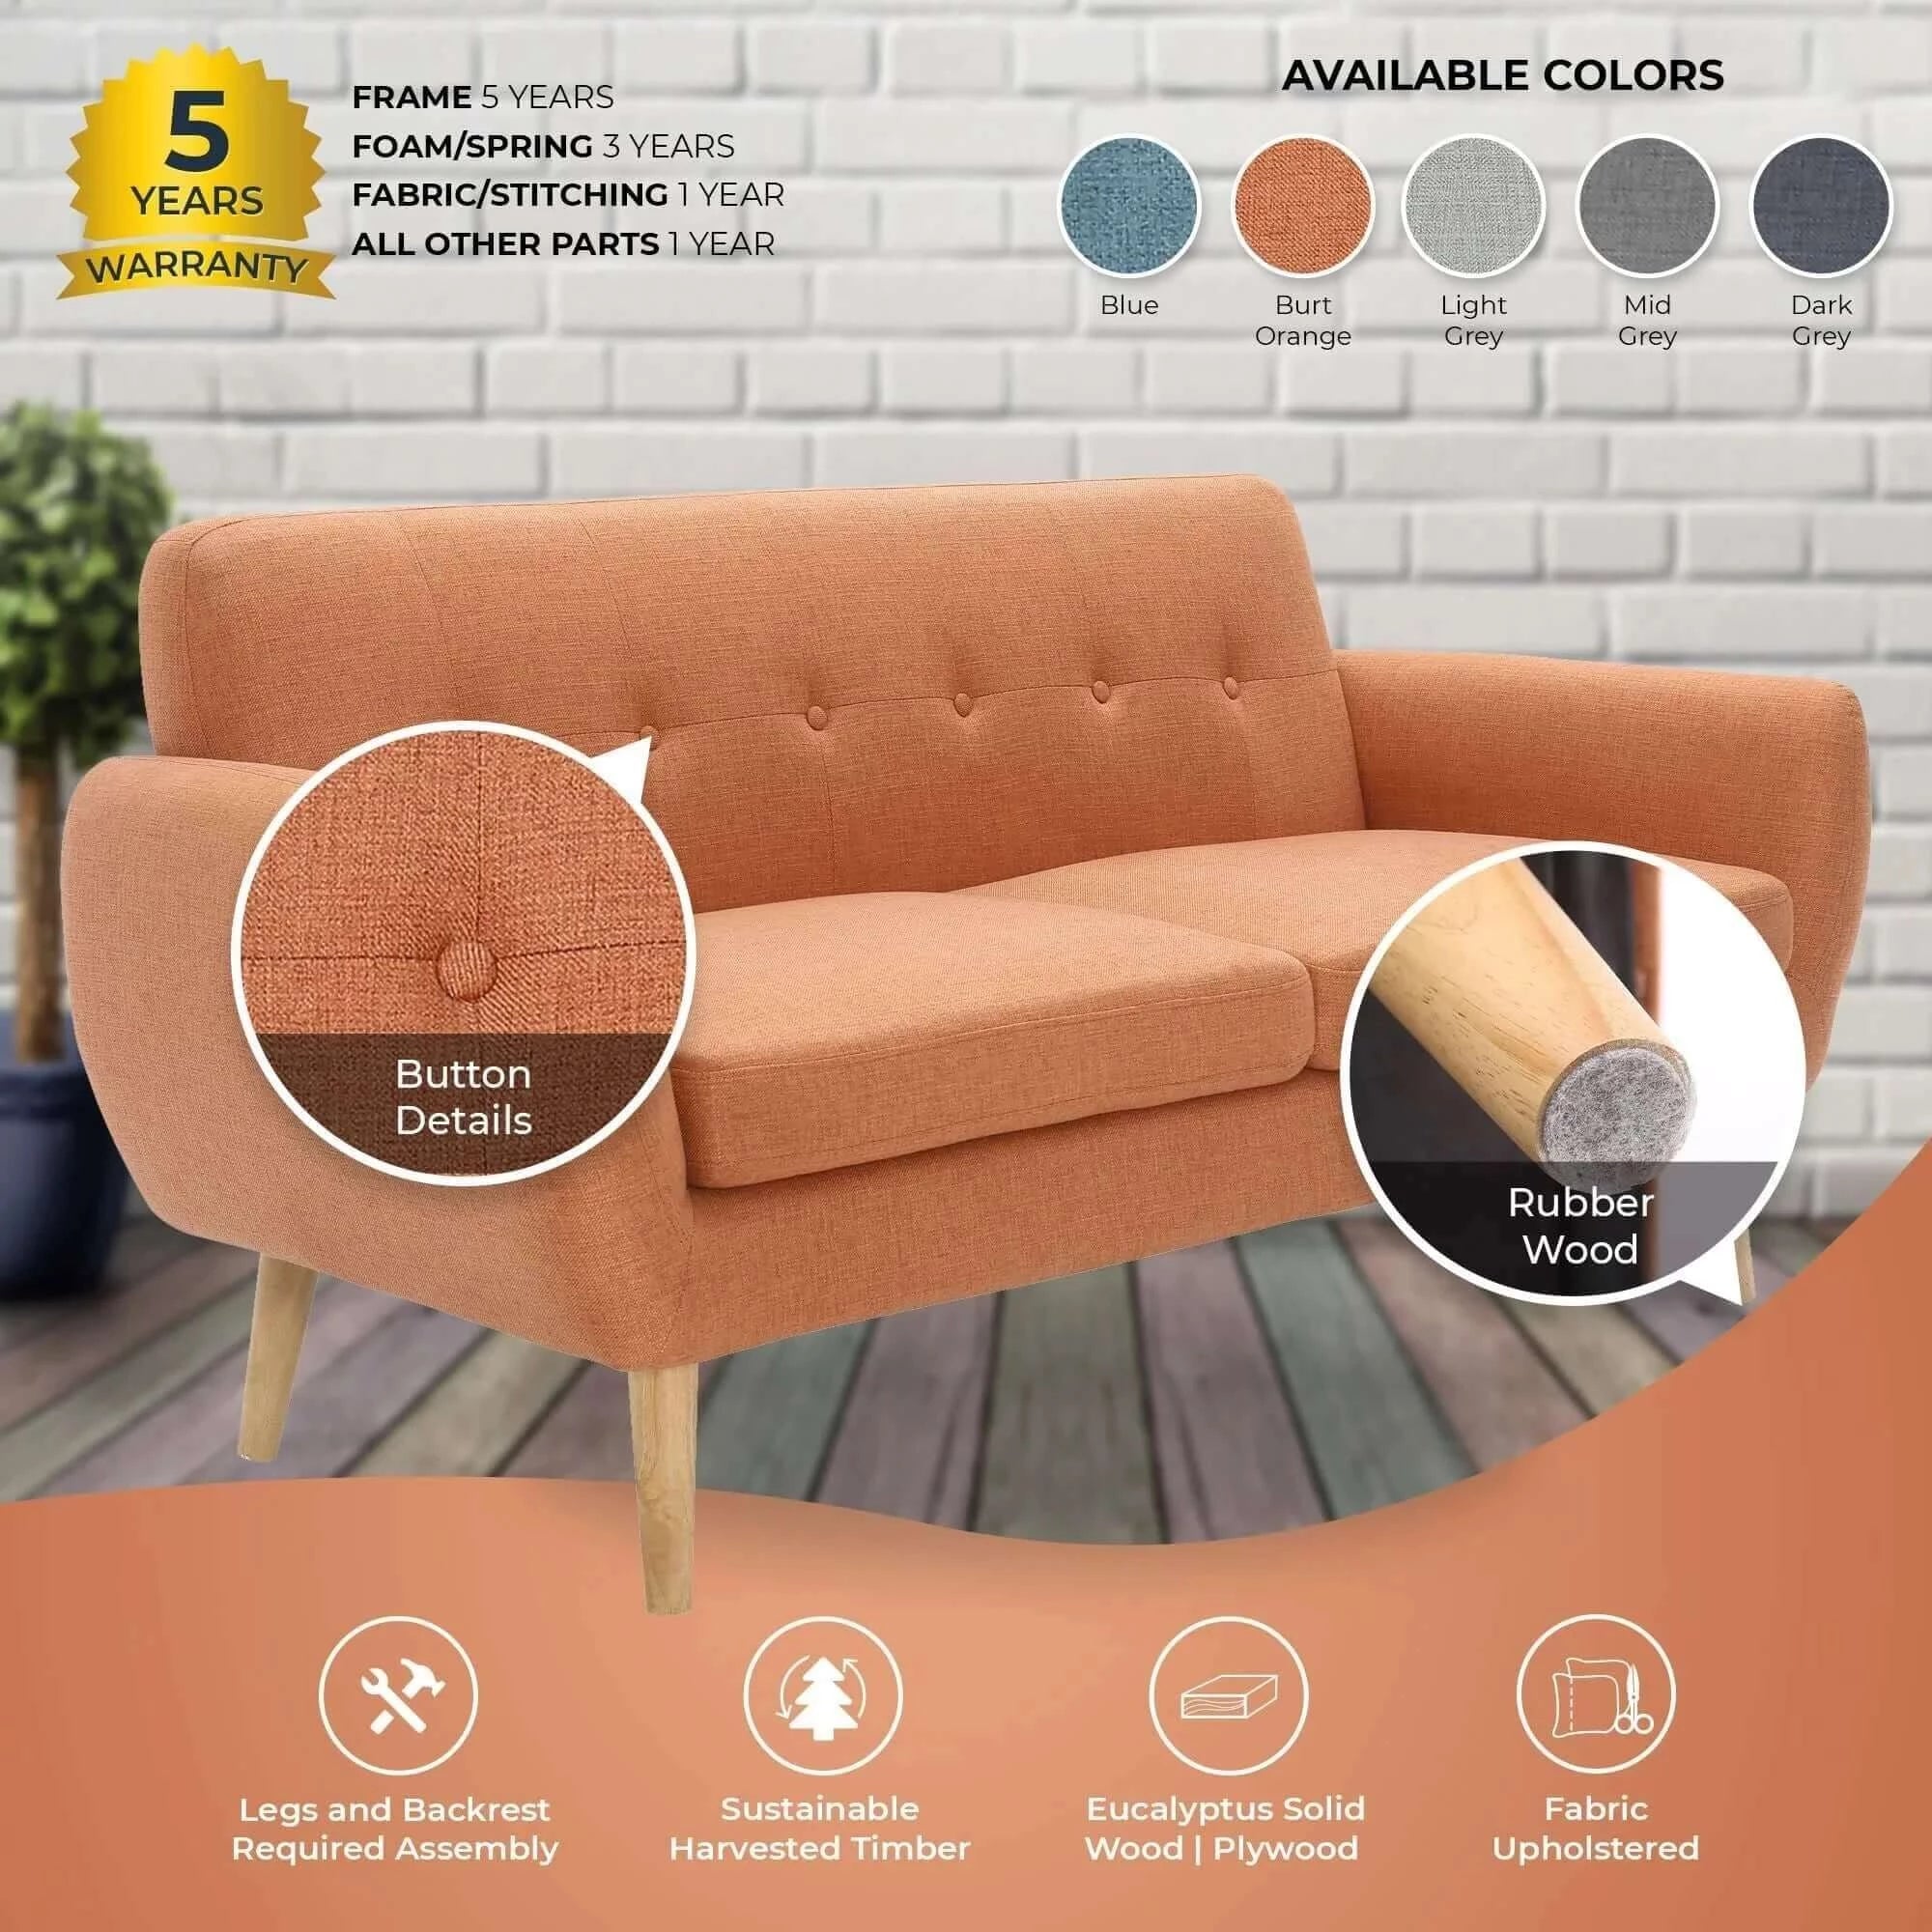 Buy dane 3 + 1 + 1 seater fabric upholstered sofa armchair lounge couch - orange - upinteriors-Upinteriors